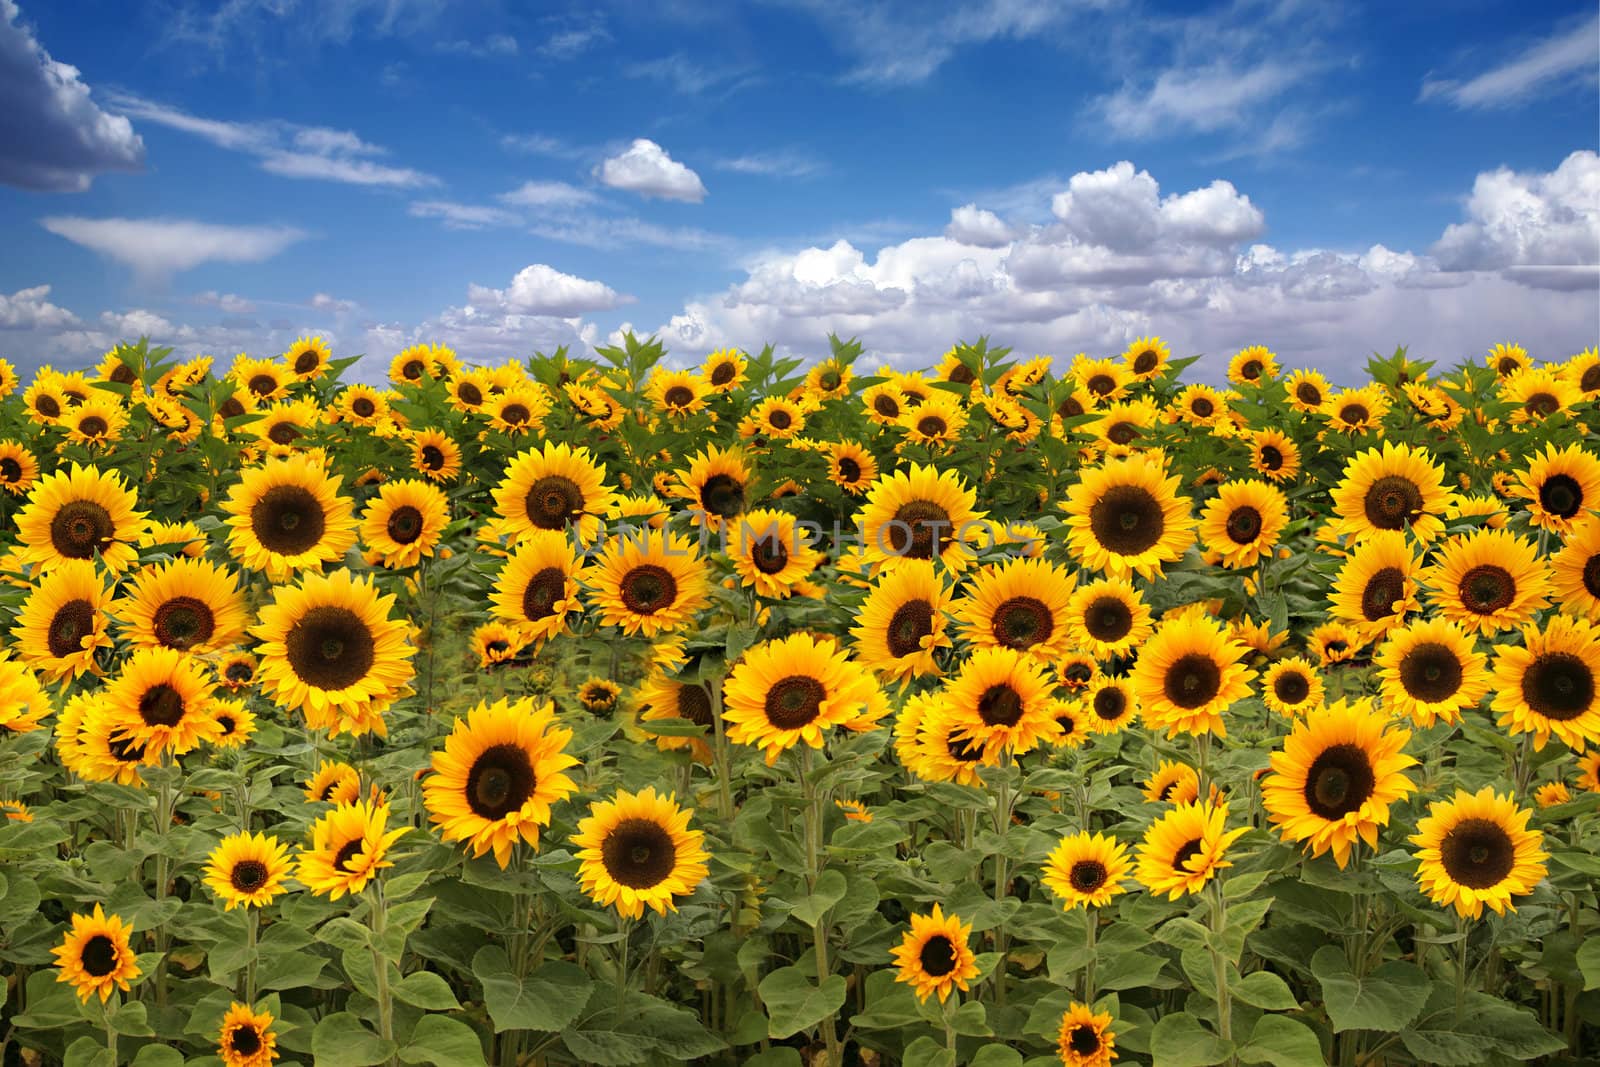 Farmland Field of Sunflowers With a Beautiful Sky